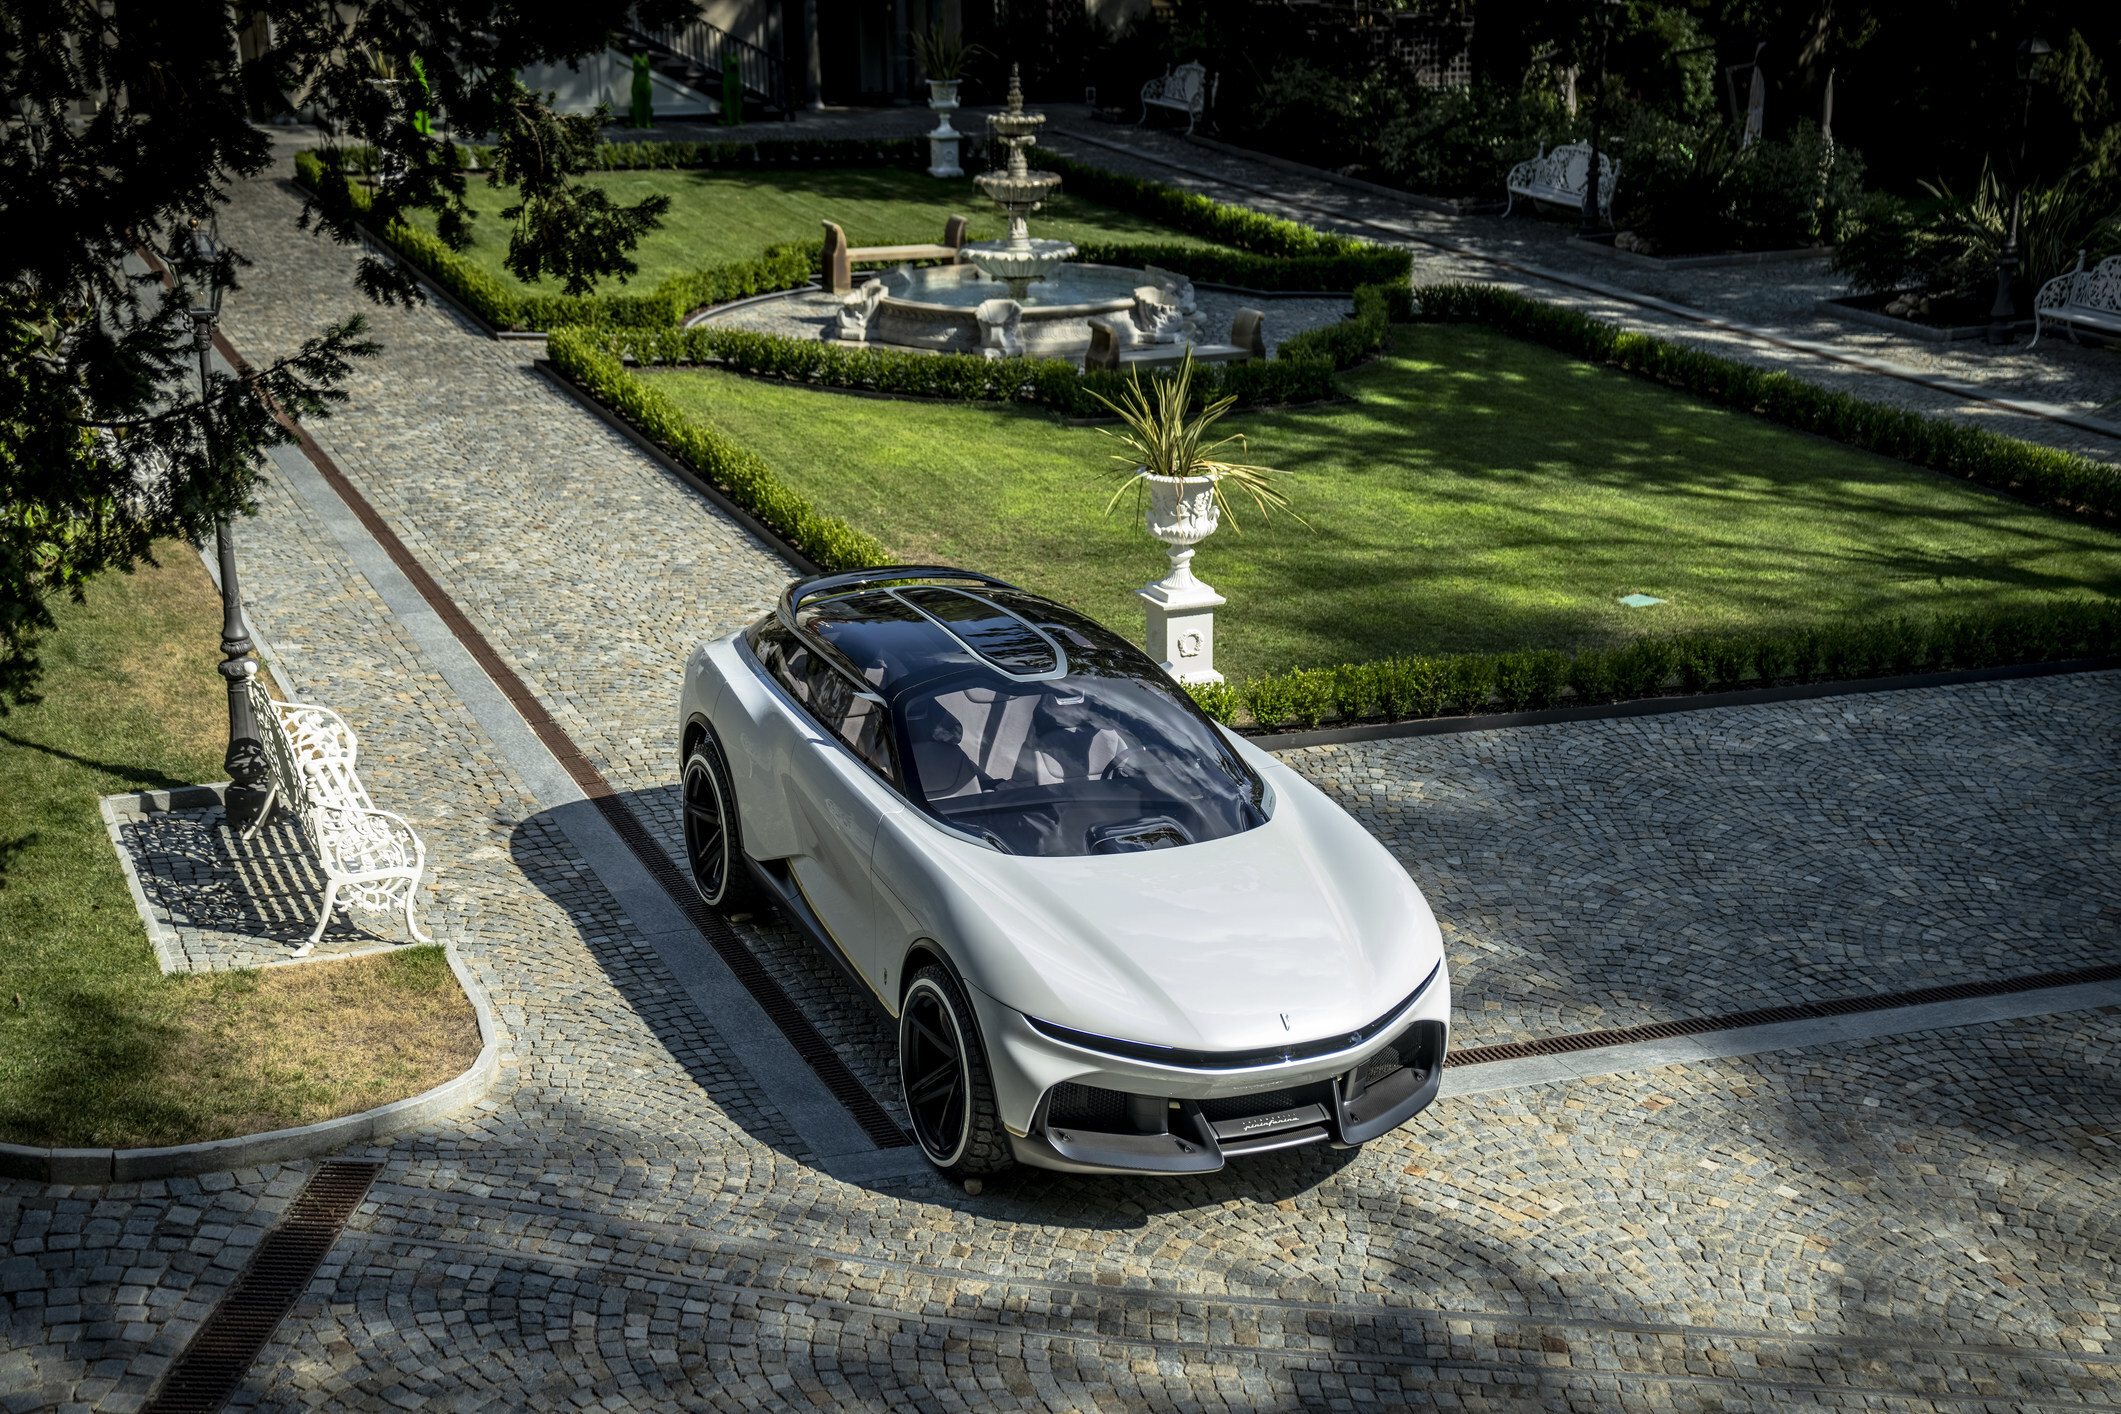 Automobili Pininfarina's award-winning PURA Vision electric Luxury Utility Vehicle debuts at Concorso d’Eleganza Villa d’Este, showcasing innovative design and technology on May 24-26, 2024.